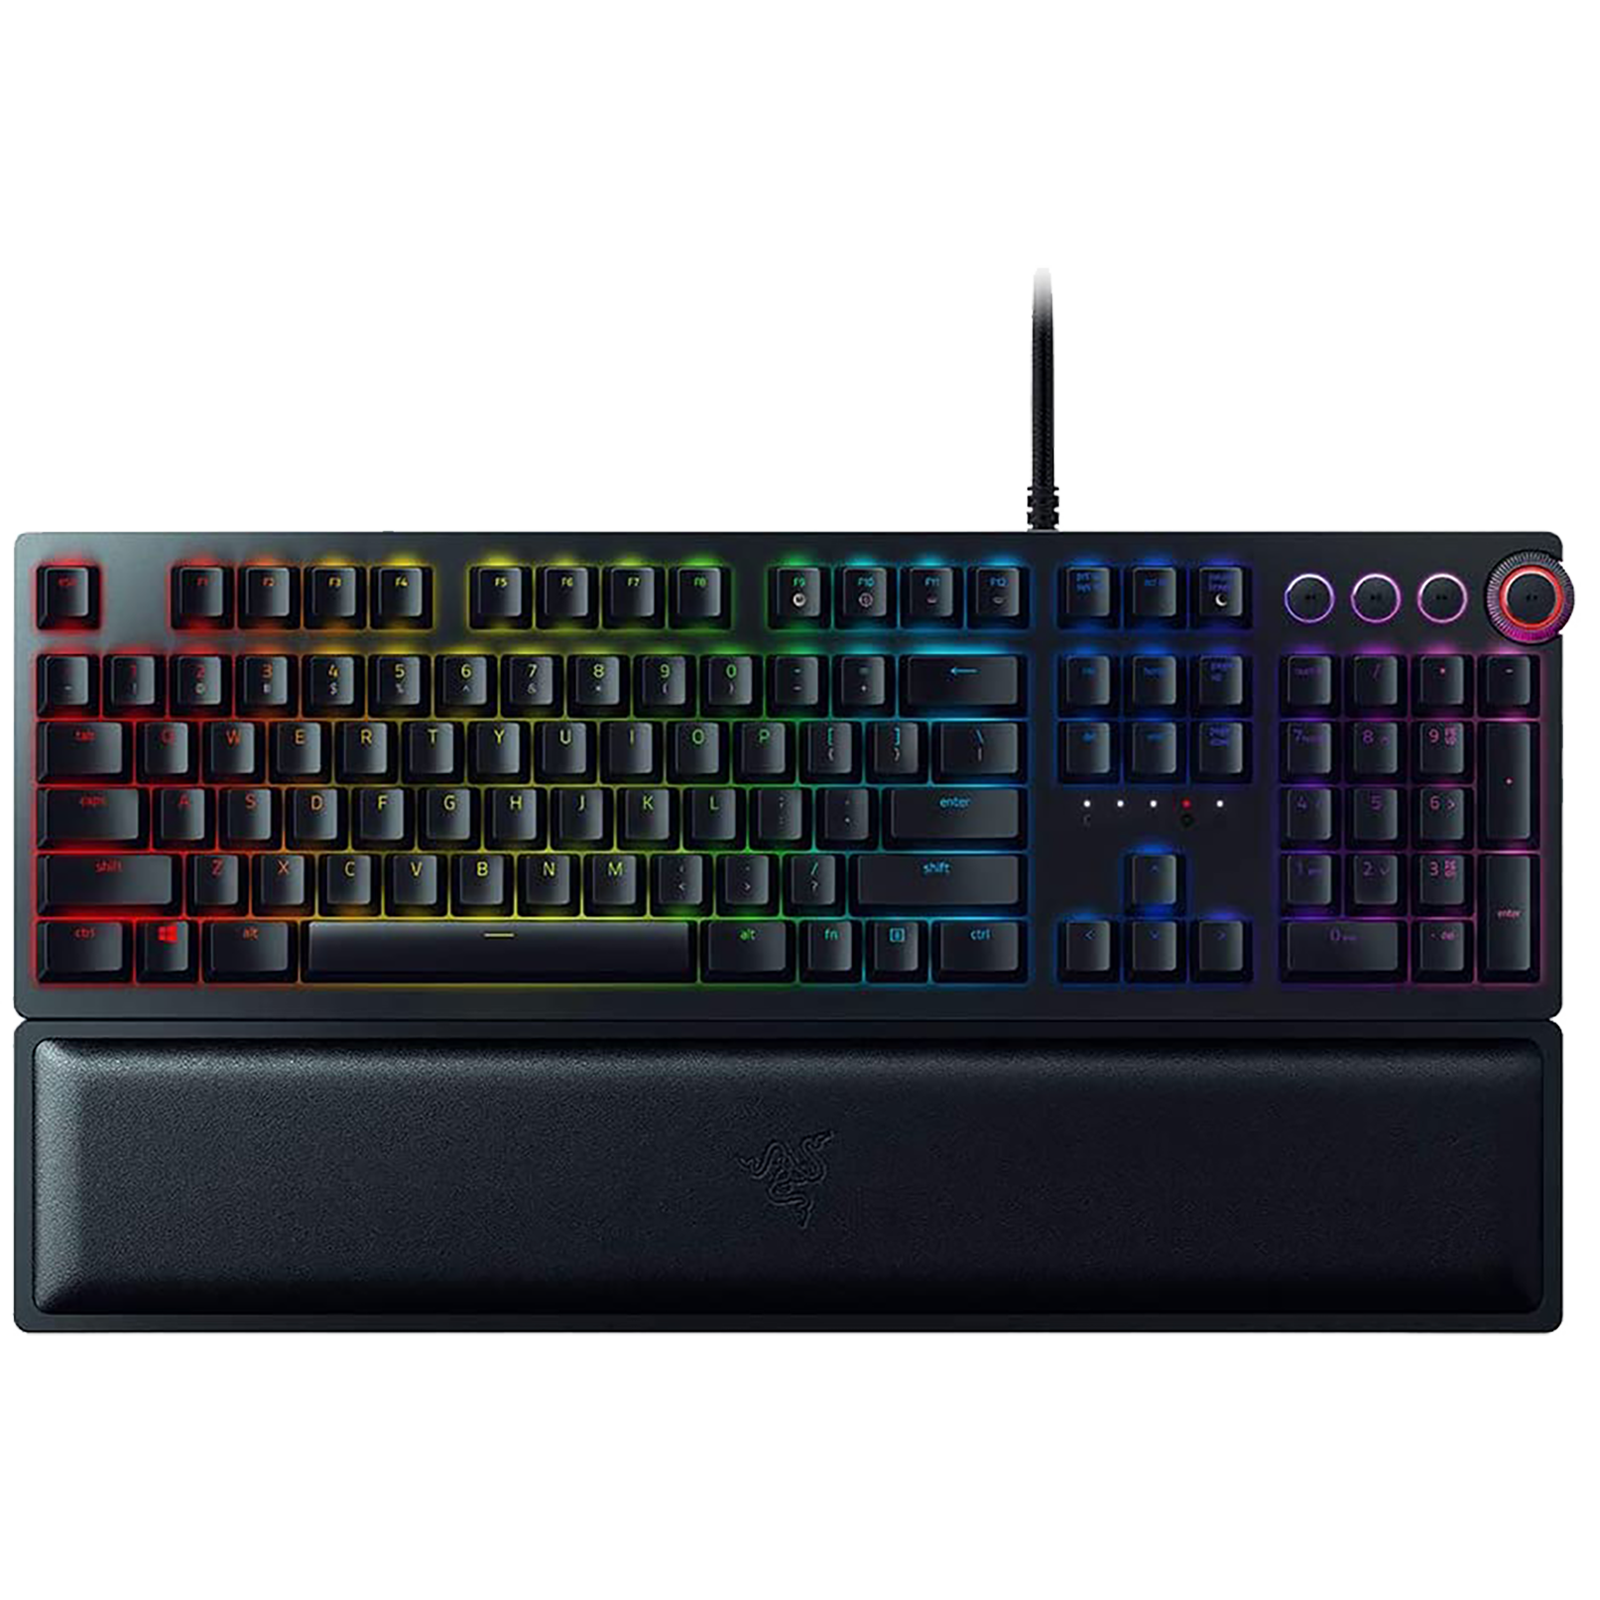 Razer Huntsman Elite Wired Gaming Keyboard (Linear Optical Switch, RZ03-01871000-R3M1, Black)_1